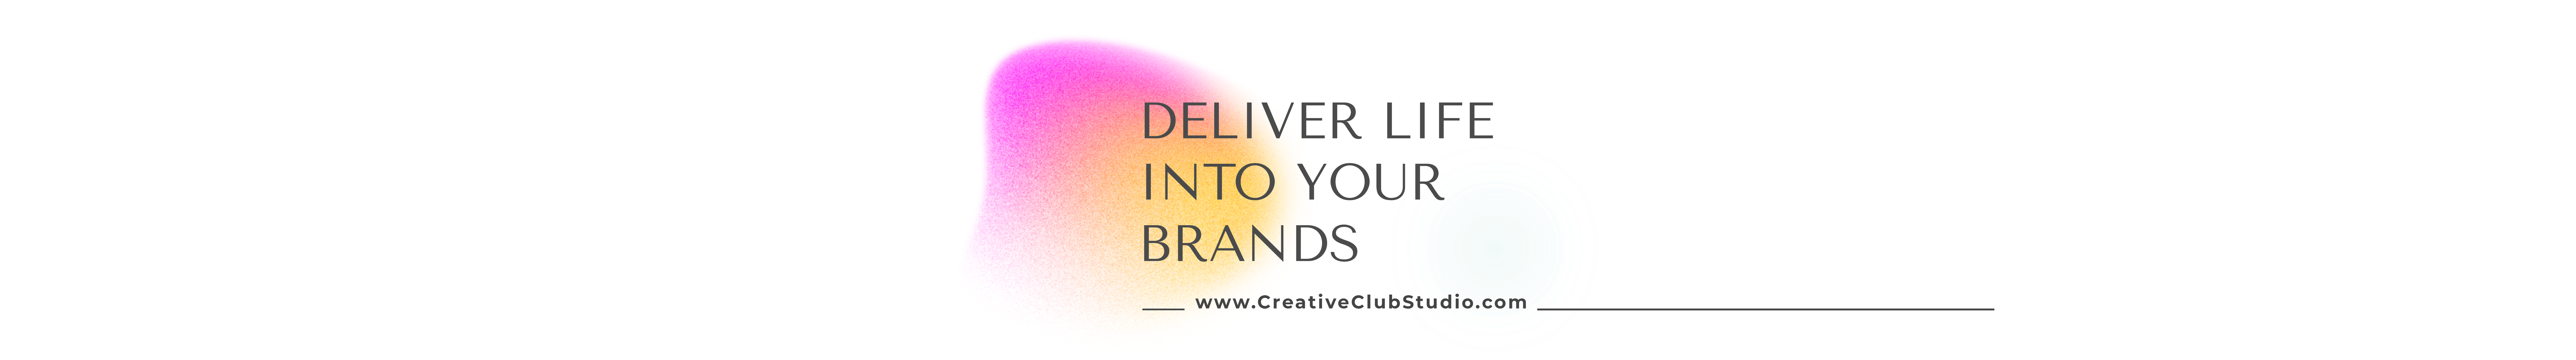 Creative Club's profile banner